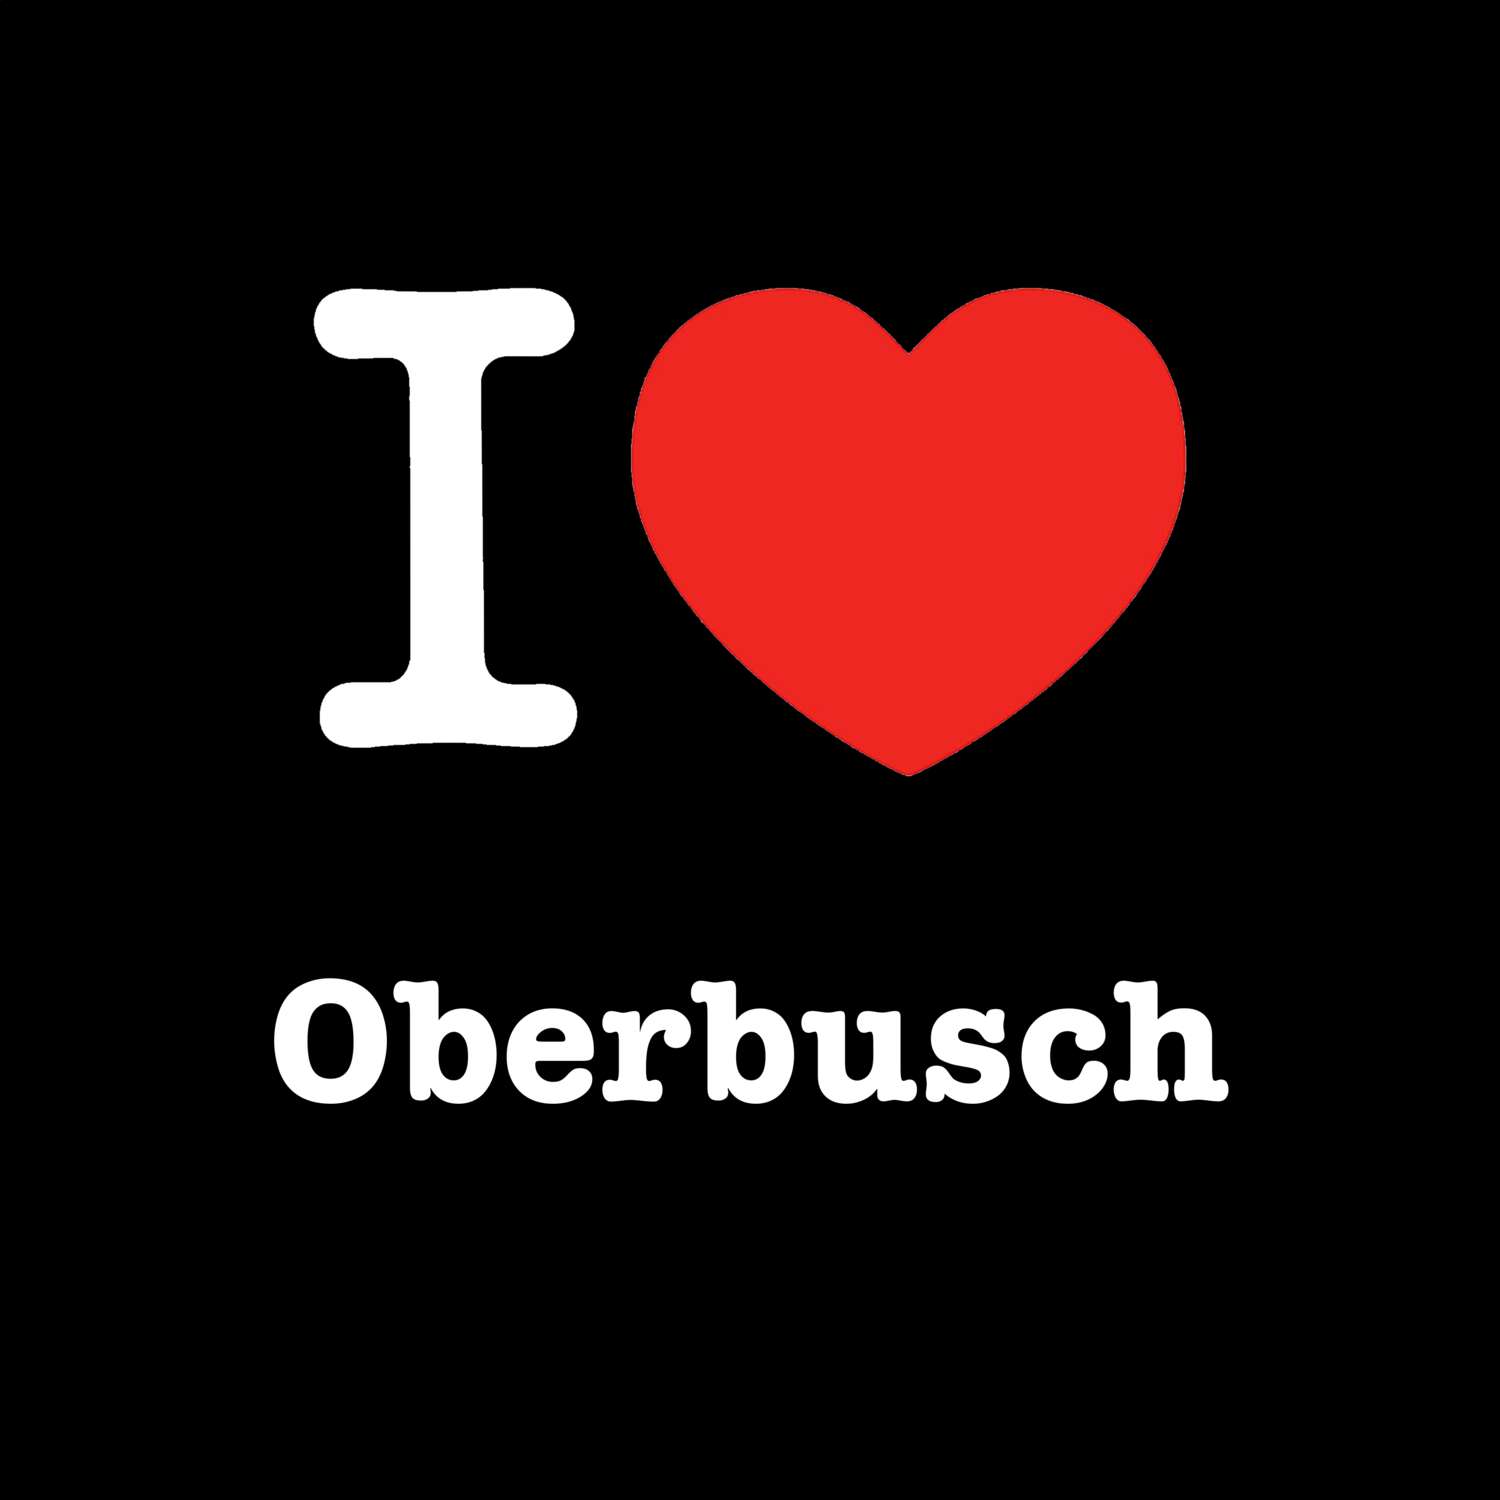 Oberbusch T-Shirt »I love«